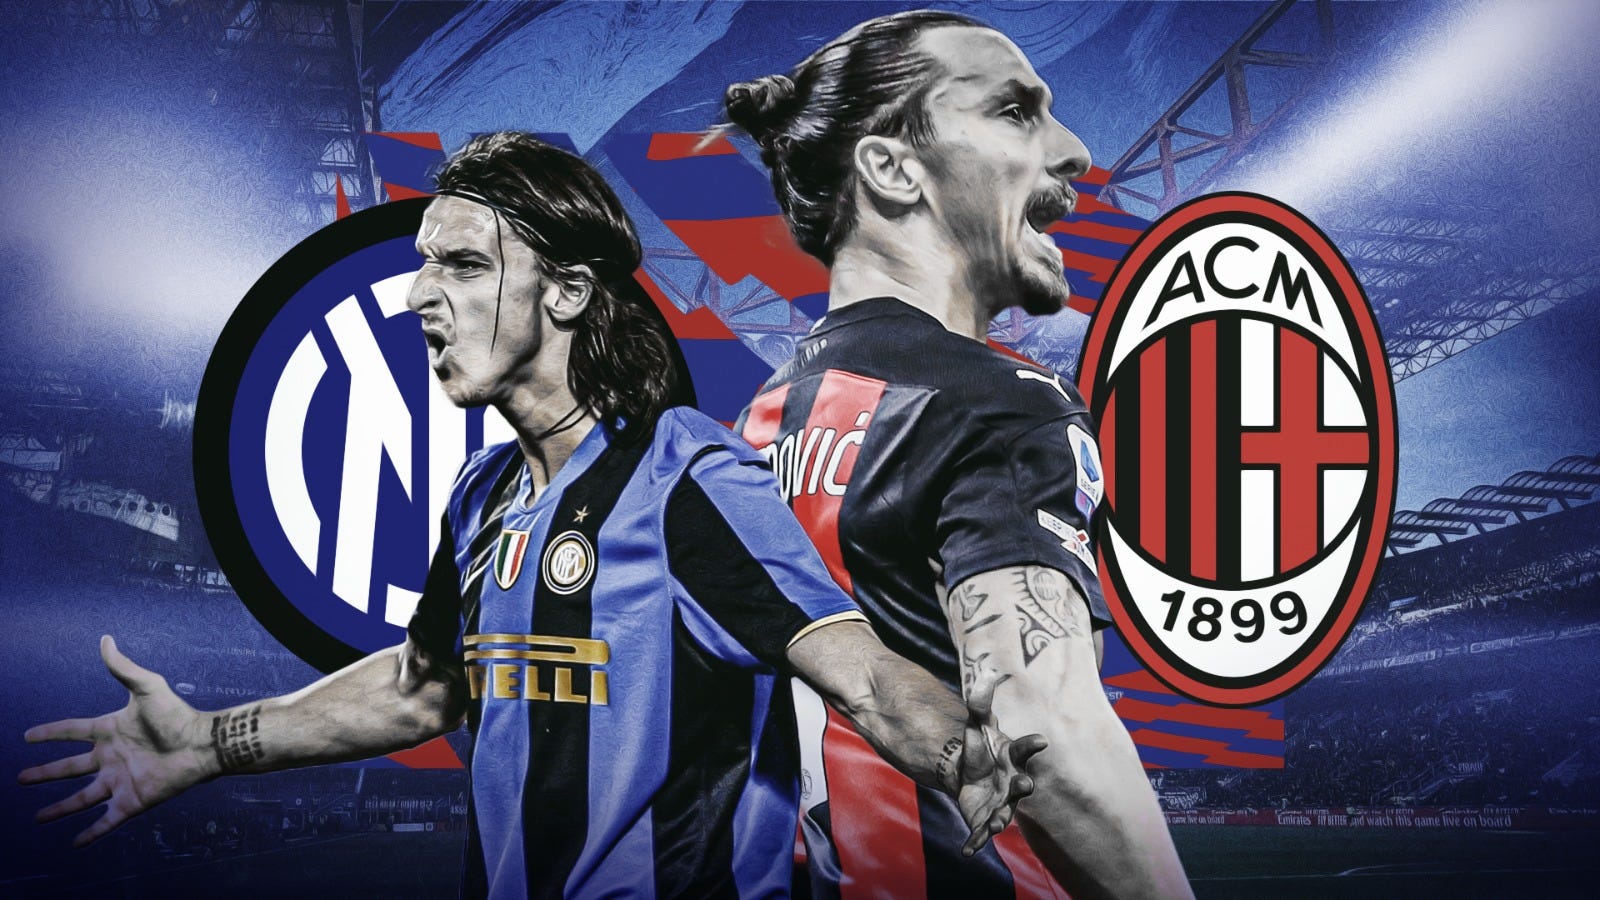 Derby Della Madonnina - Inter Vs AC Milan - GOAL Travel